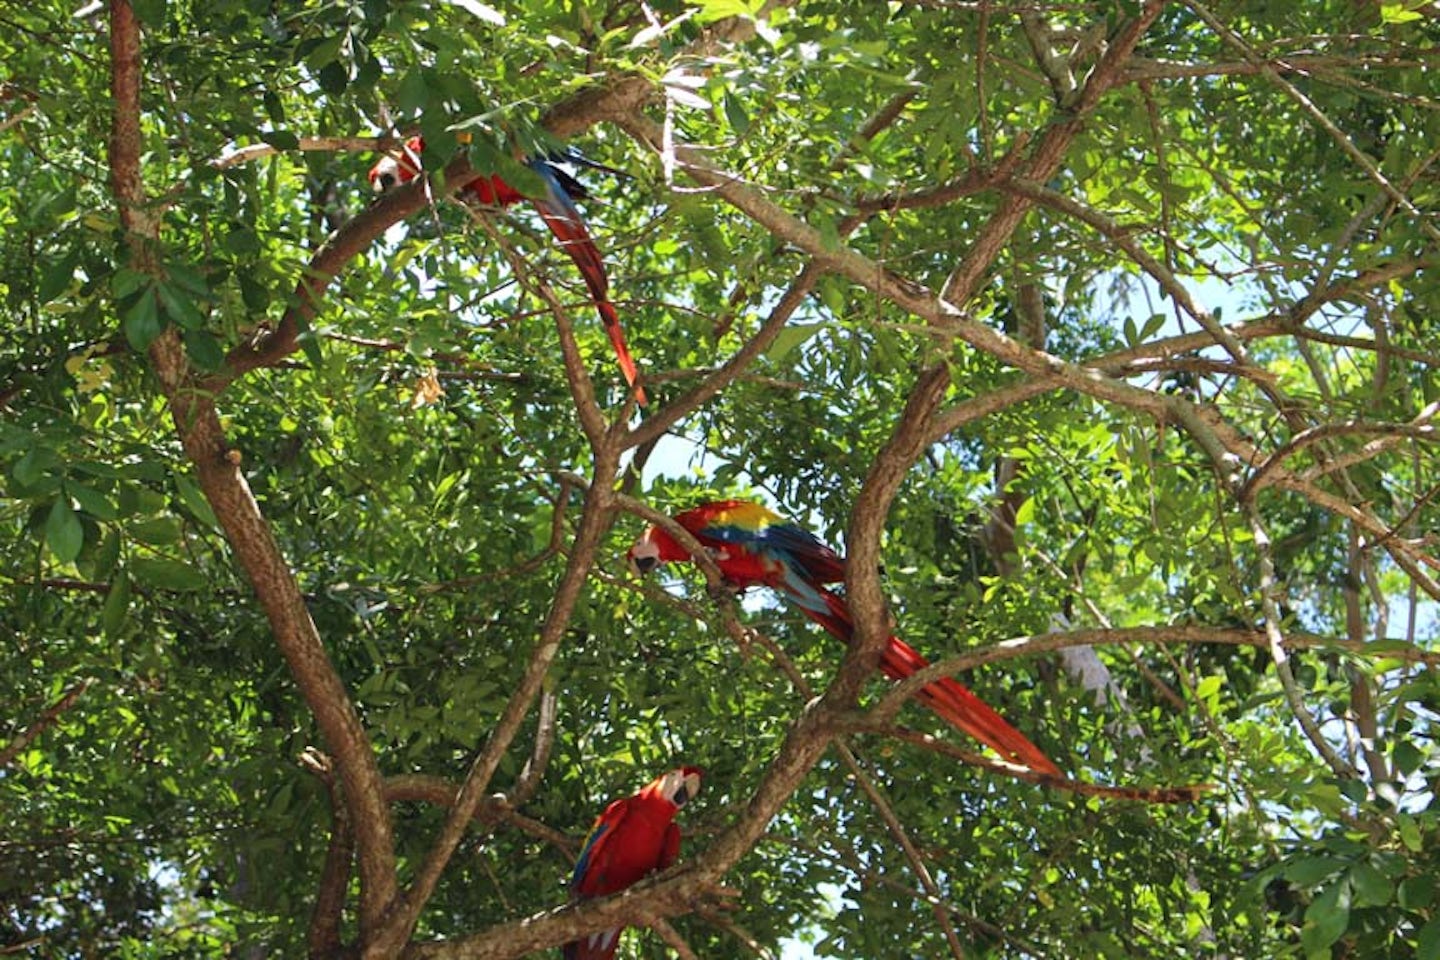 Gumbalimba Park, Honduras